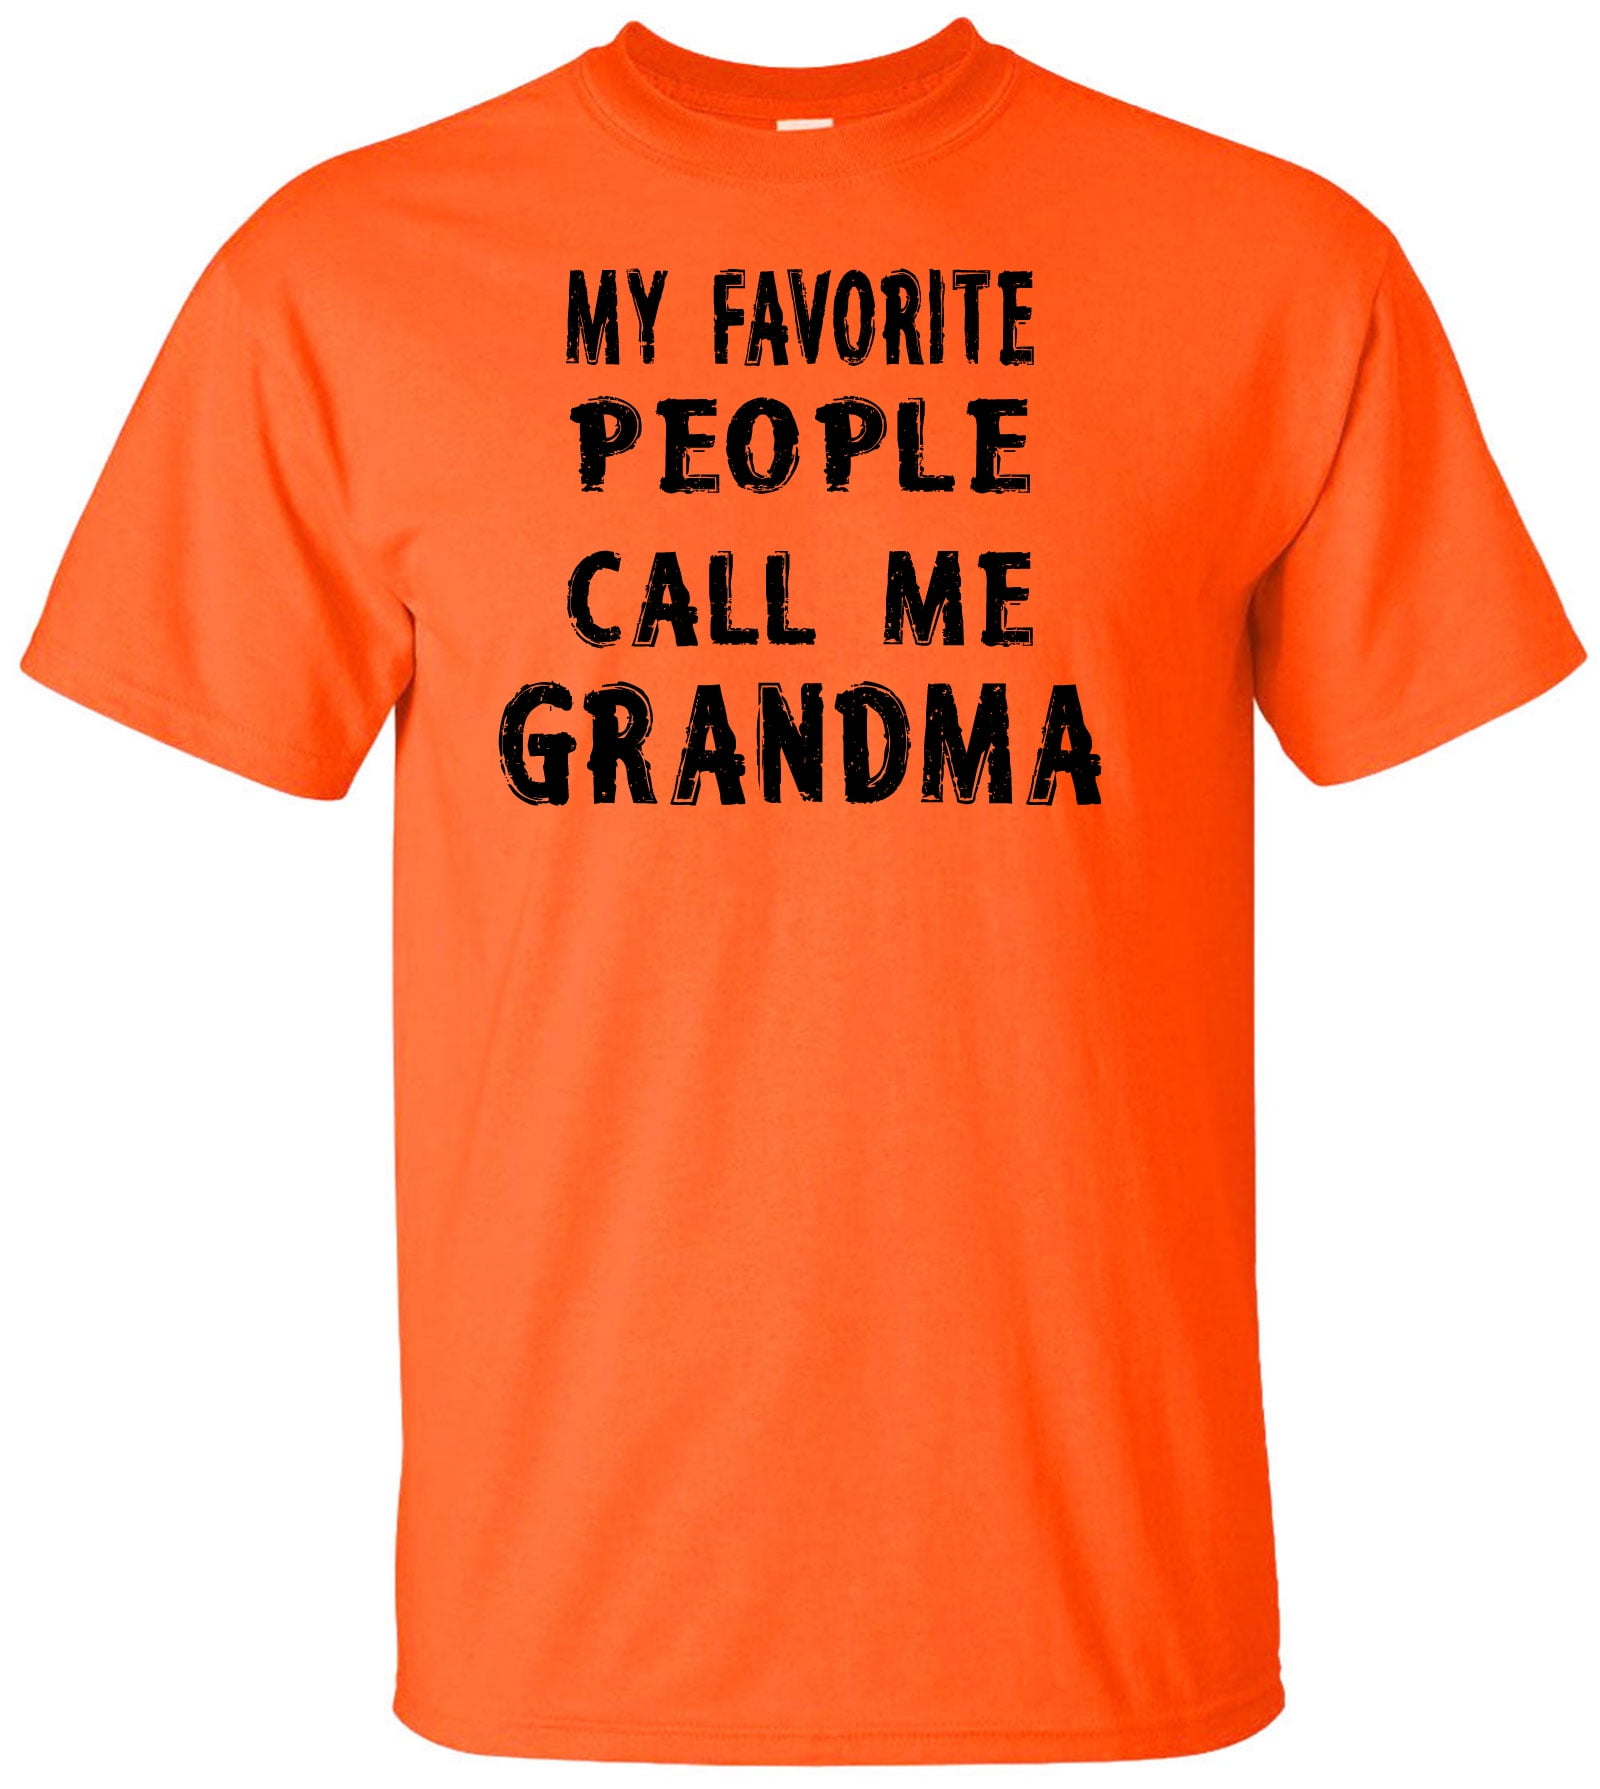 All my favorite people call me grandma Unisex Jersey Short Sleeve Tee Grandma gift